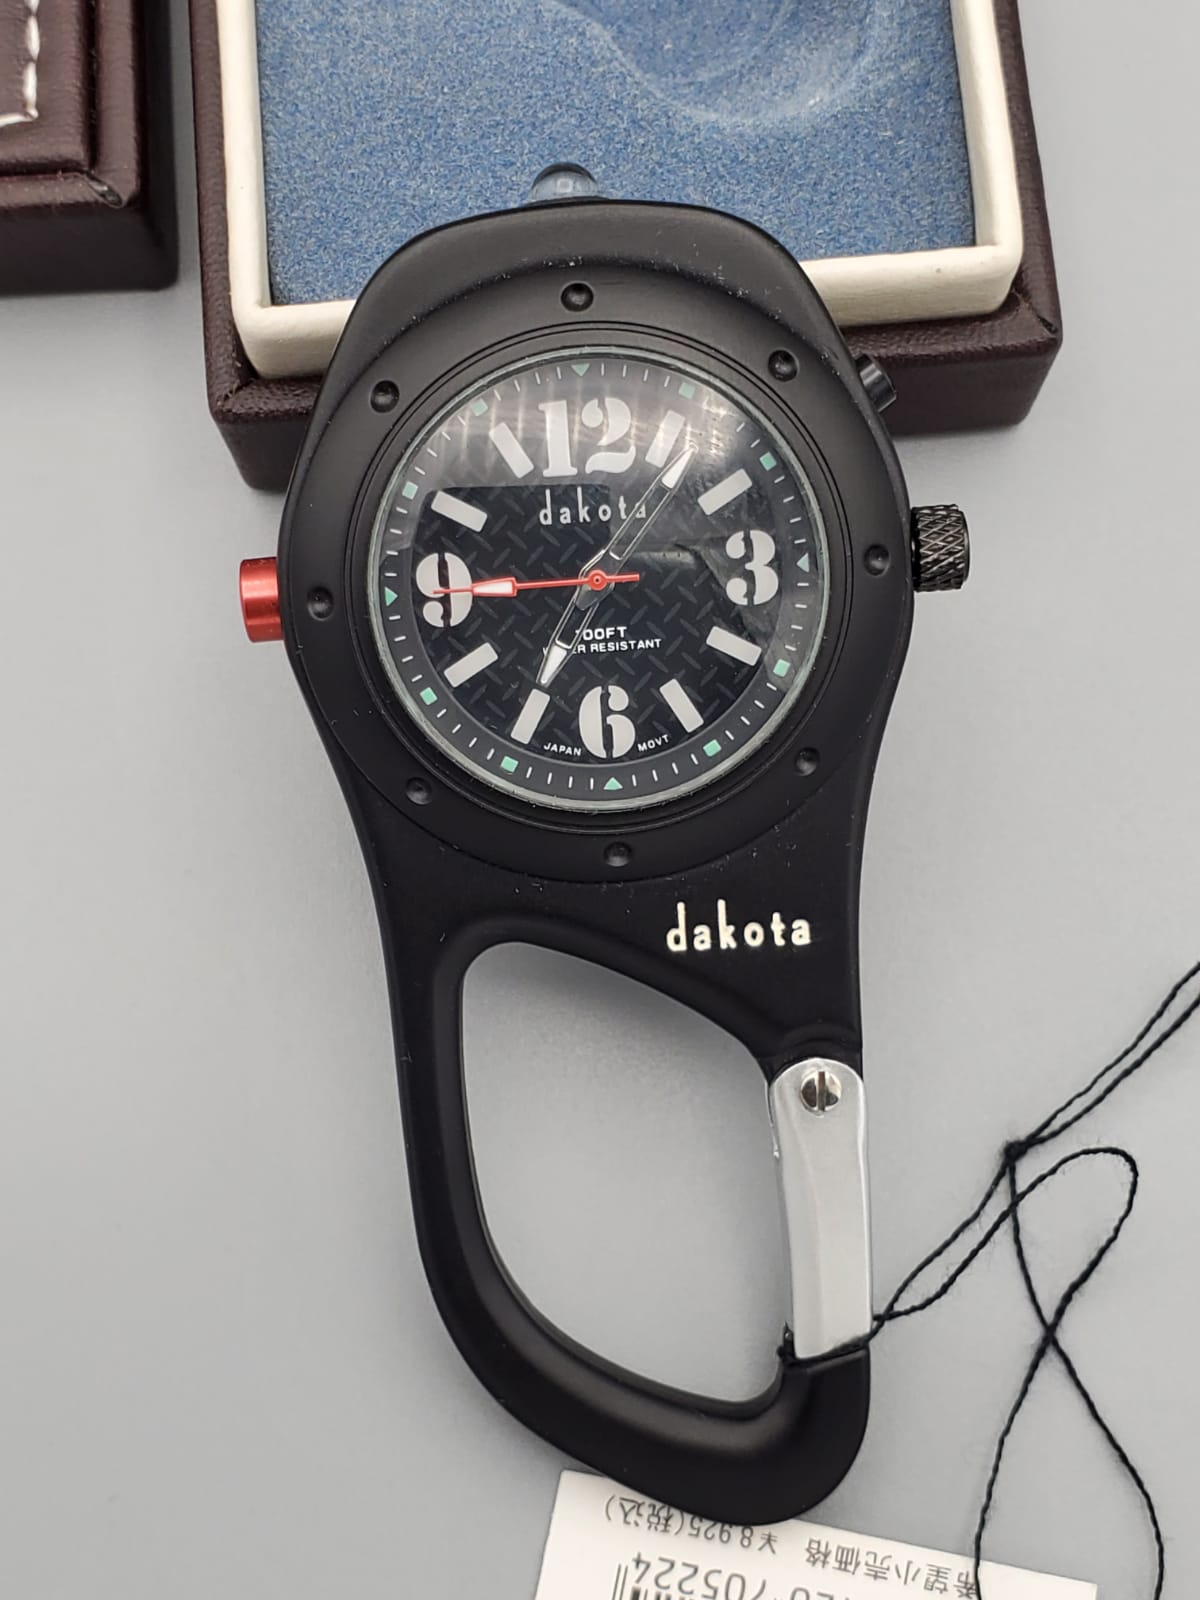 Dakota Watch Company Tough Clip, Digital Dial, Black Case - KnifeCenter -  8233-2 - Discontinued